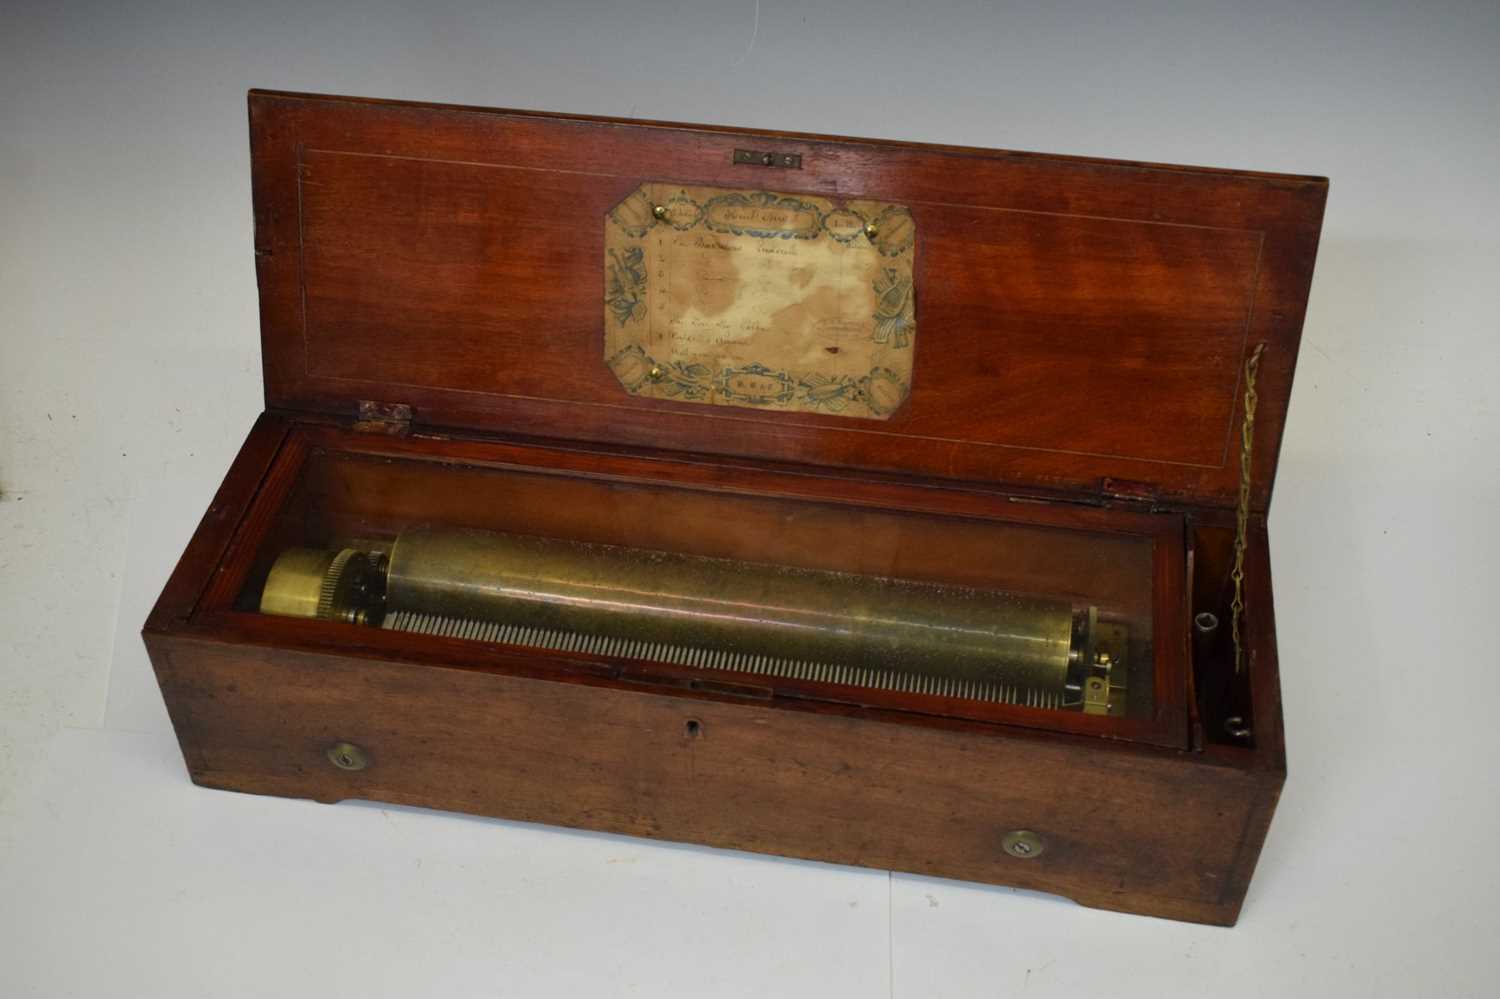 19th century mahogany inlaid cylindrical musical box - Image 2 of 12